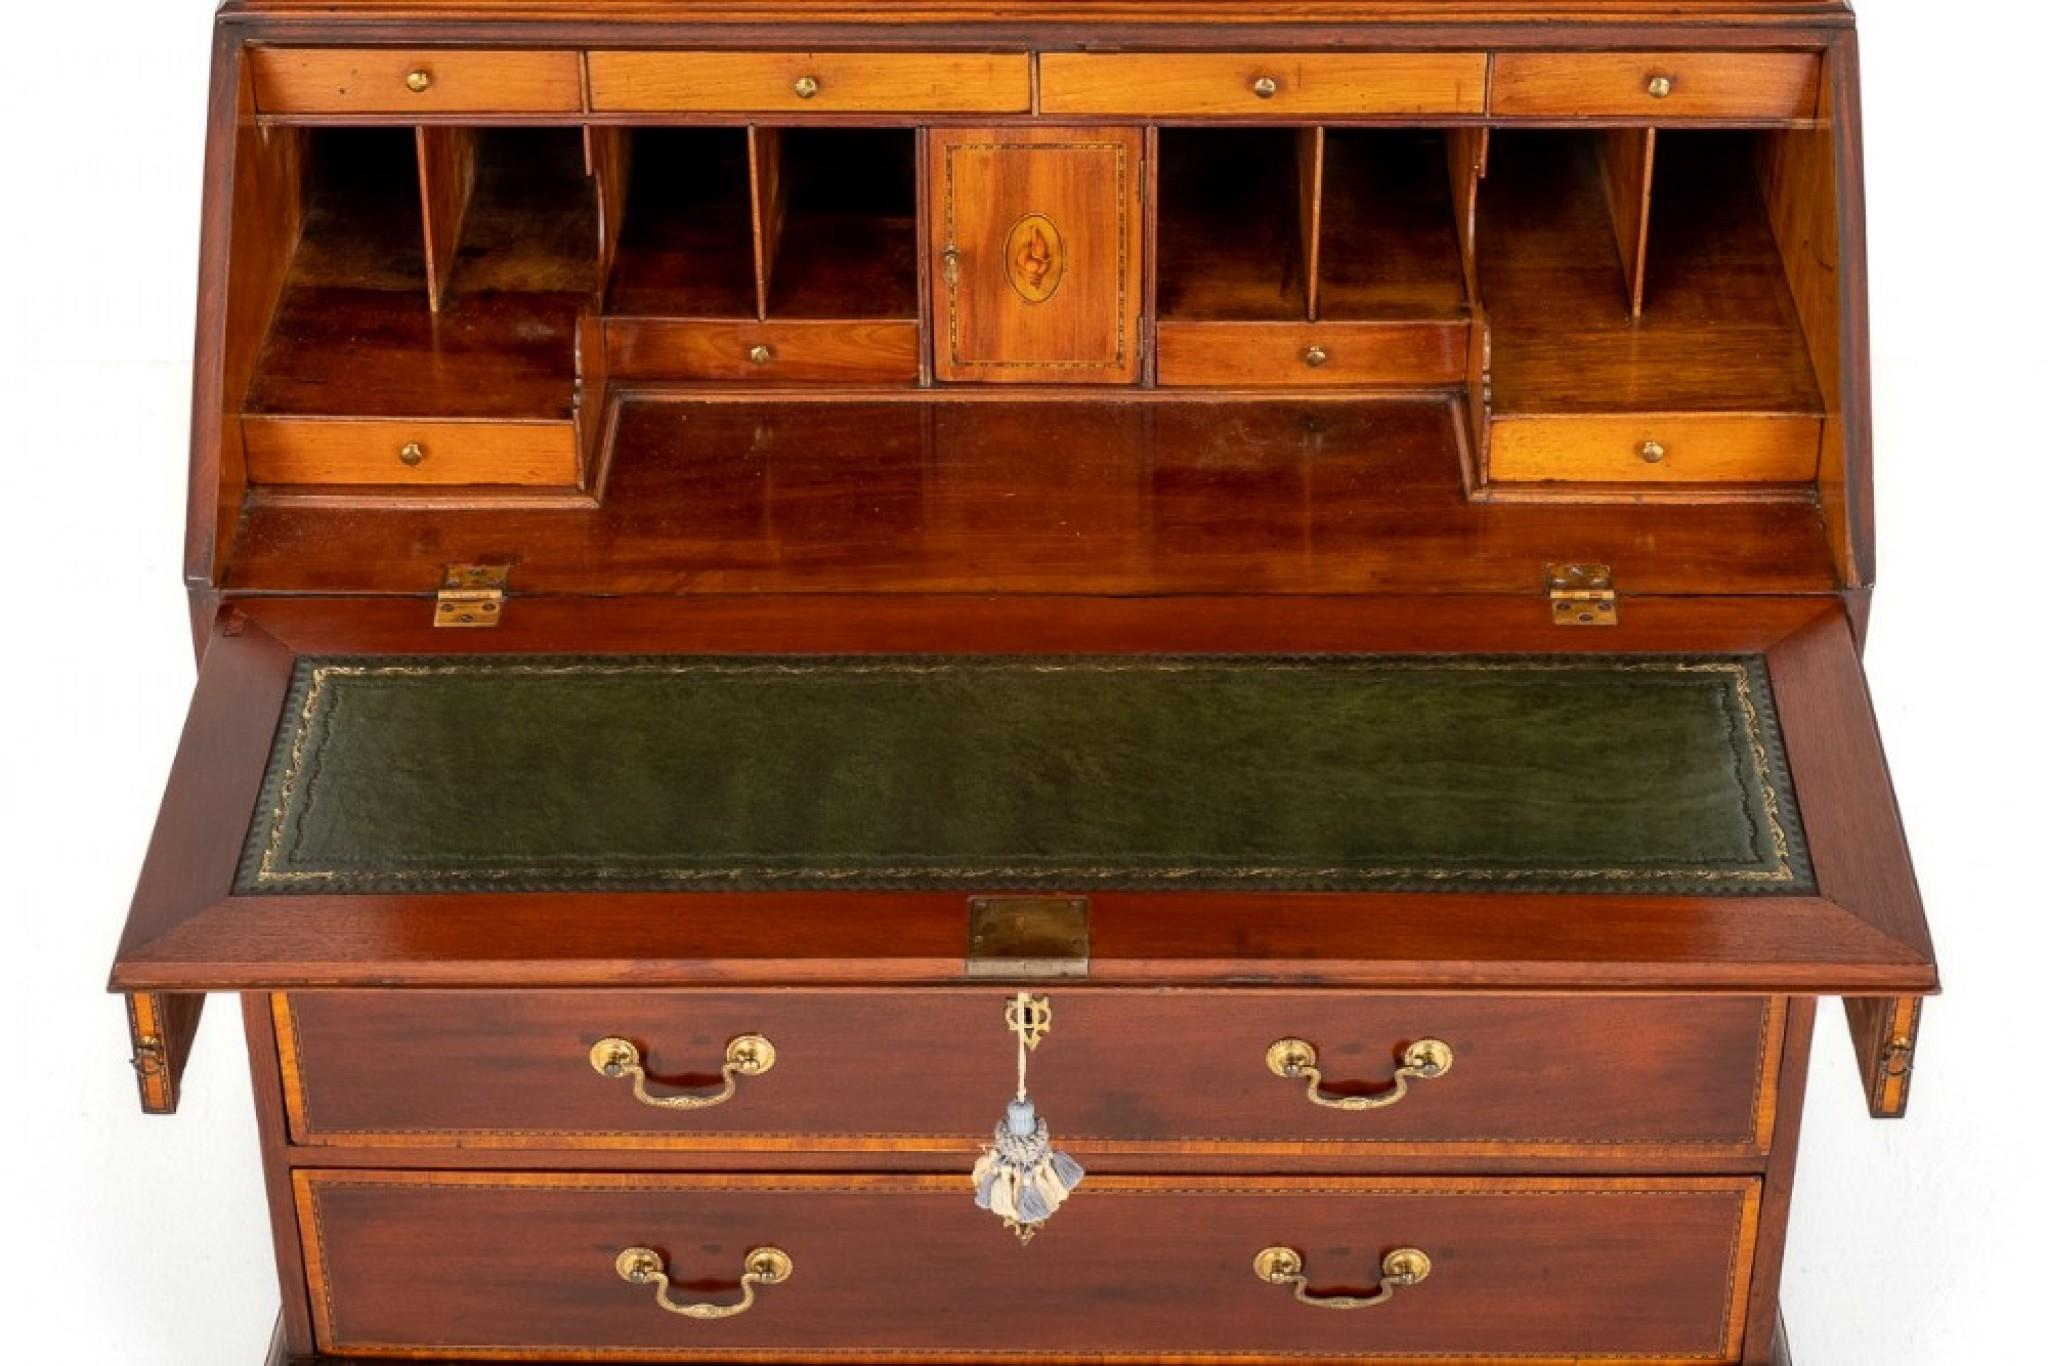 Early 19th Century Georgian Bureau Bookcase Period Mahogany Antique 1800 For Sale